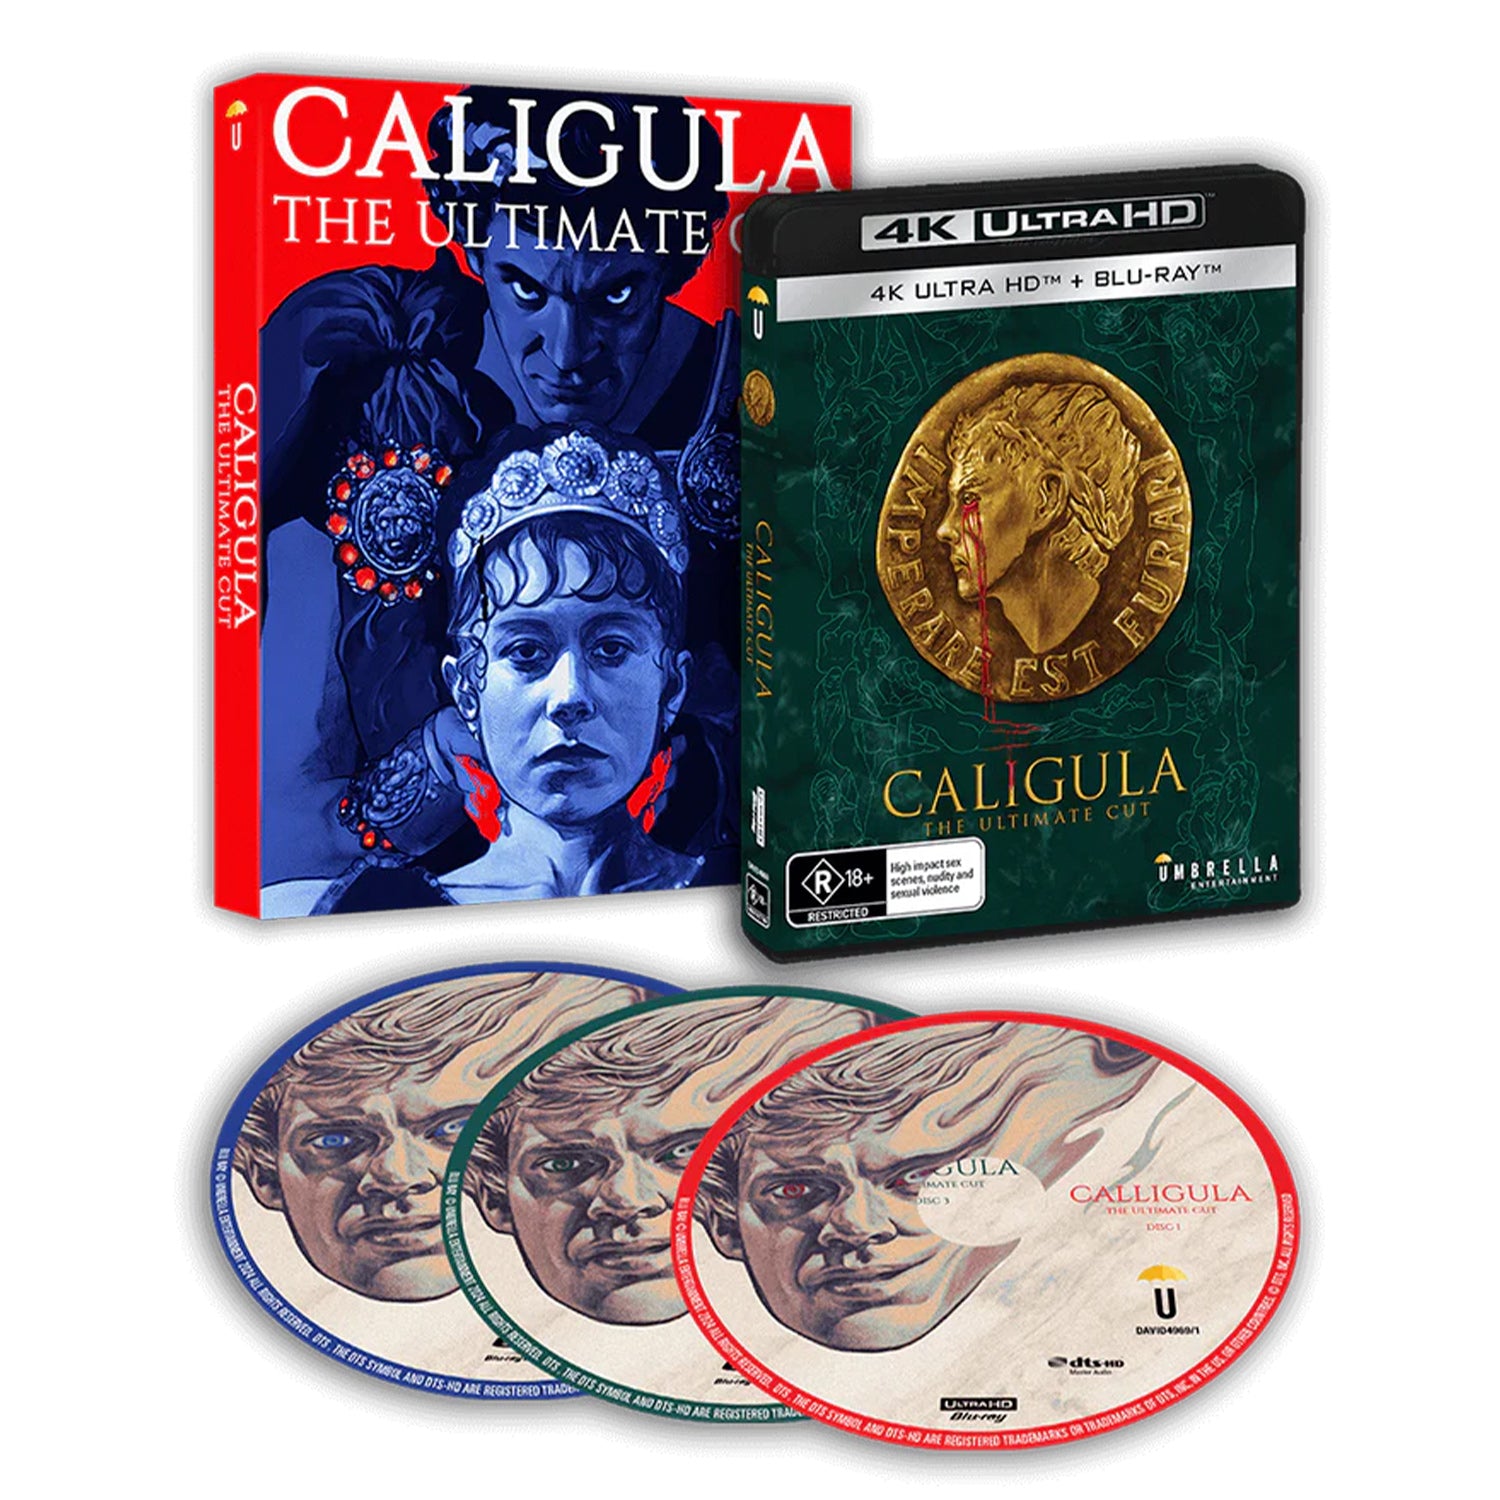 Калігула (1979) [Остаточна повна версія] (англ. язык) (4K + 2 Blu-ray + 2 Books + Magazine + Rigid case + Slipcase + 2 Posters + Artcards) ABSOLUTE POWER Edition